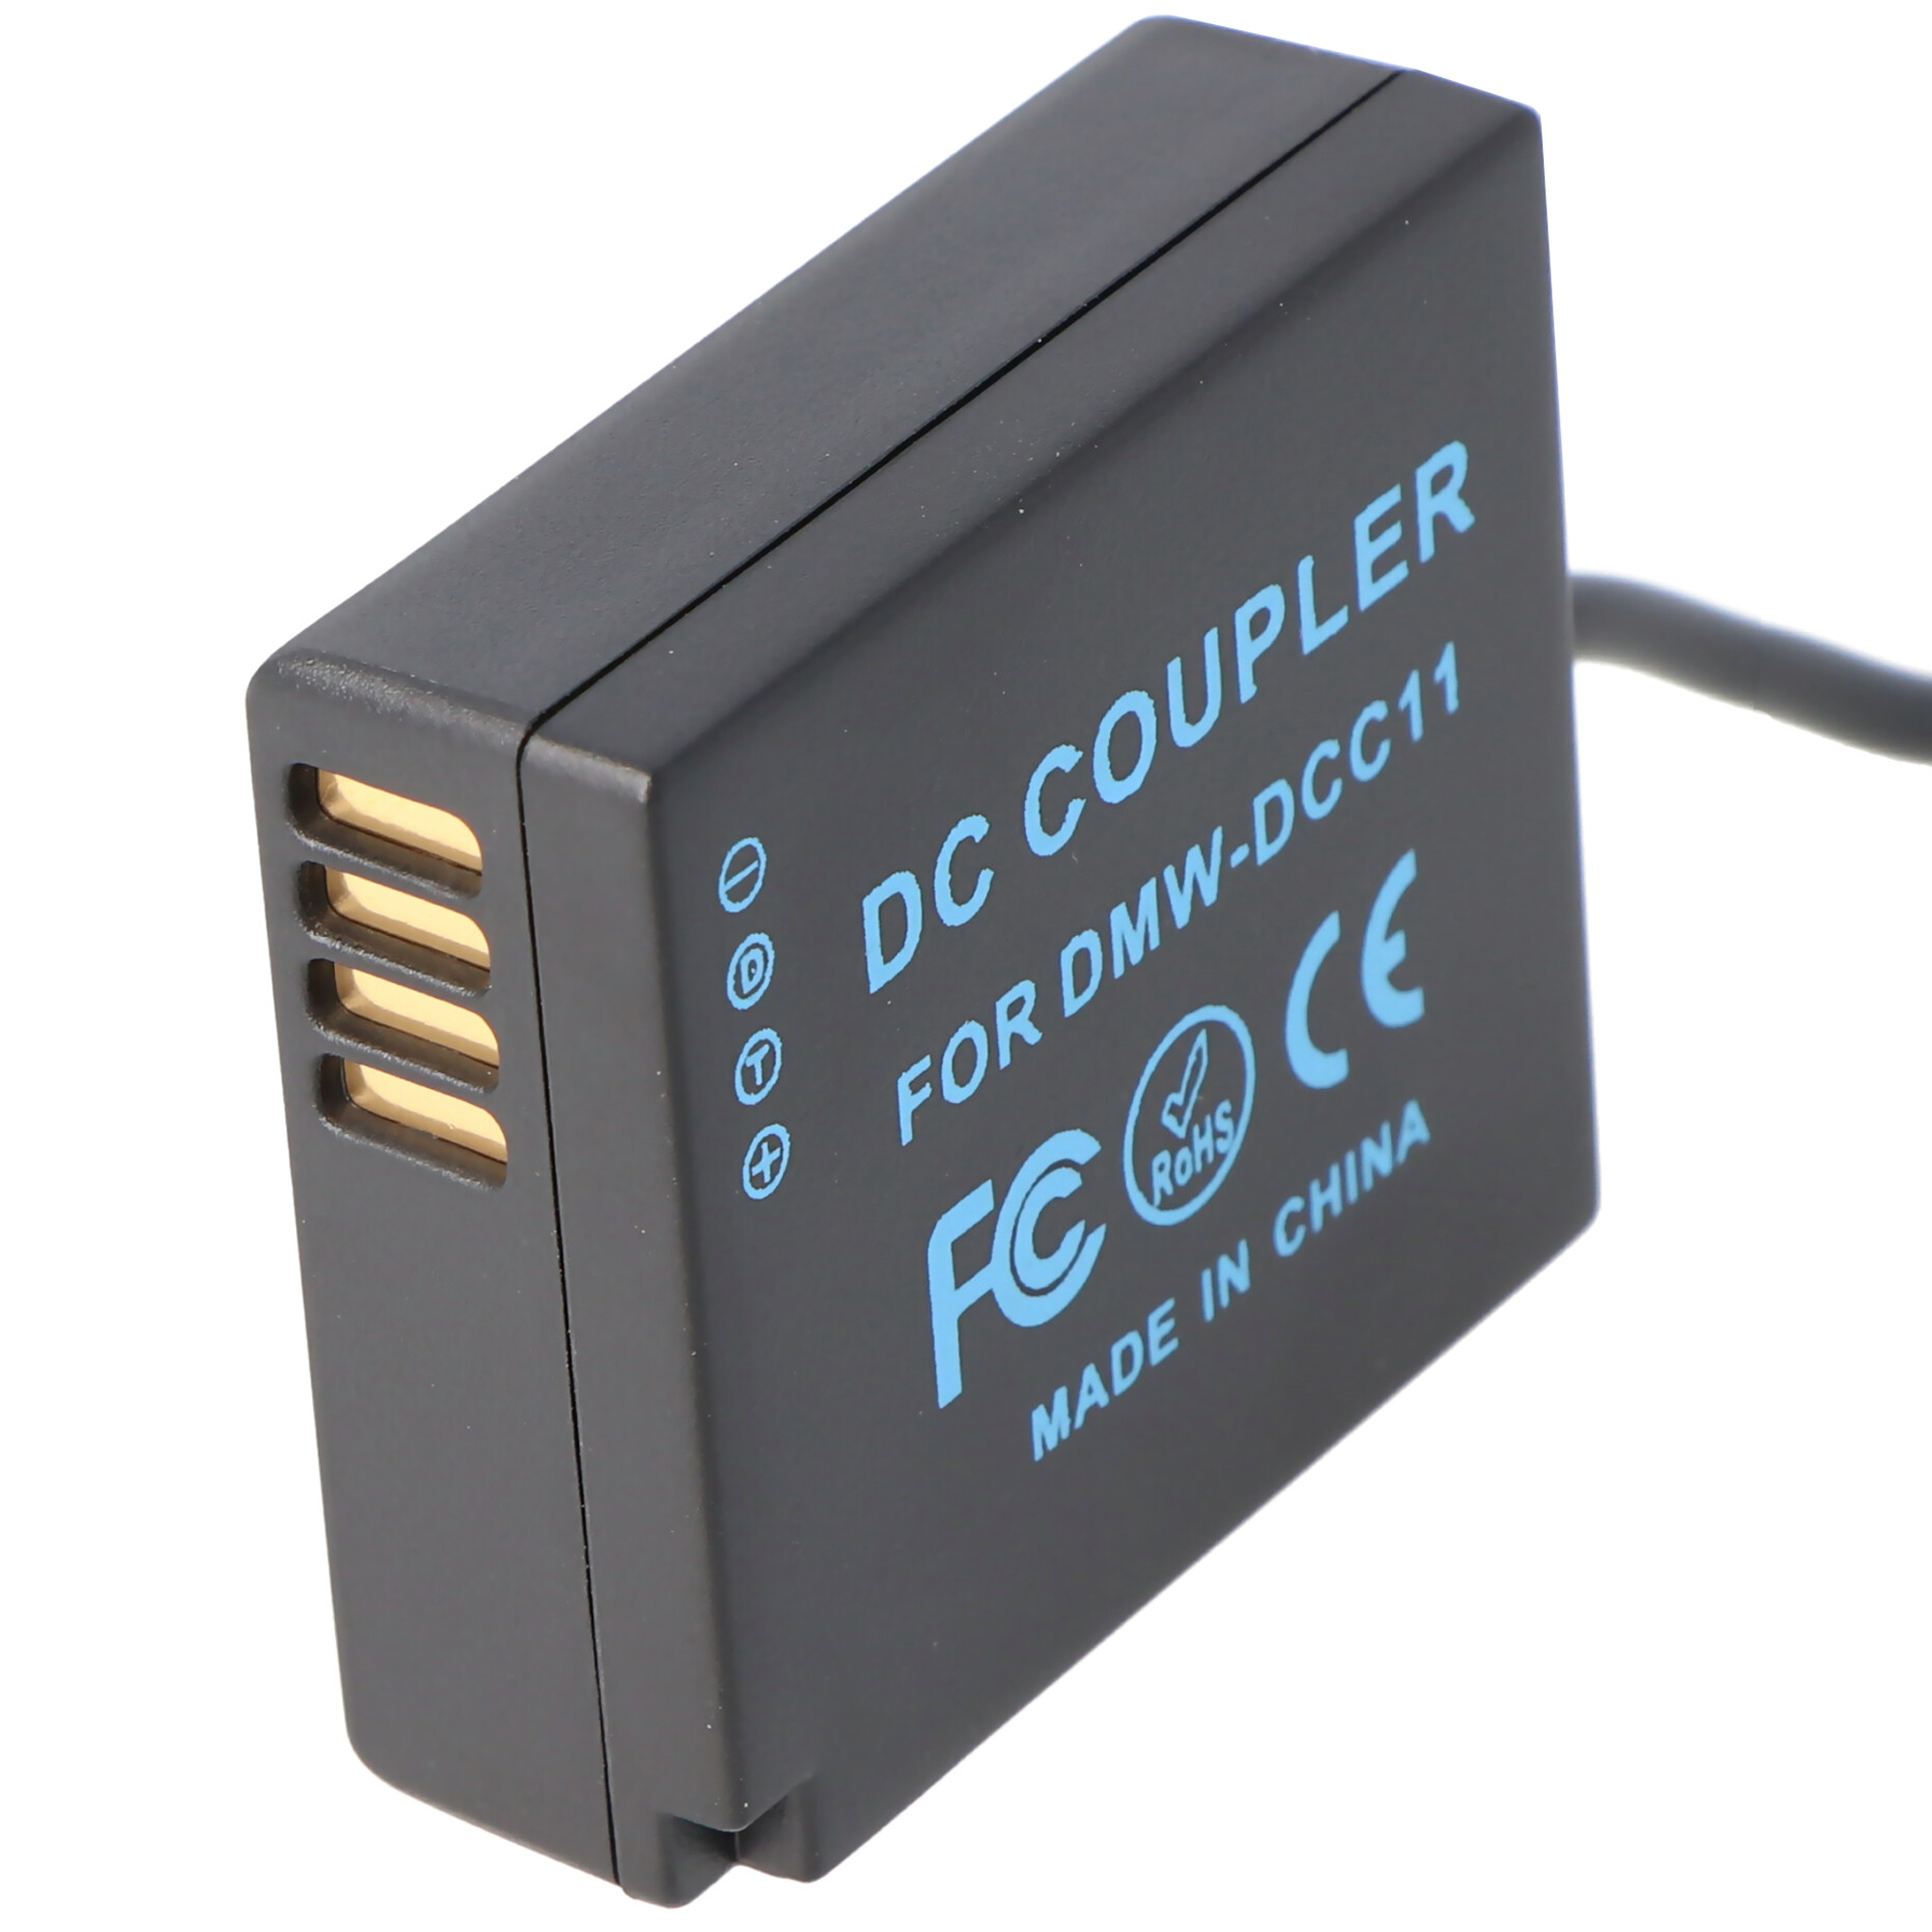 Kamera-Netzteil passend für Panasonic DMW-DCC11, DMW-AC8, DMW-DCC11E, DMC-GX7 inklusive Gleichstromkuppler